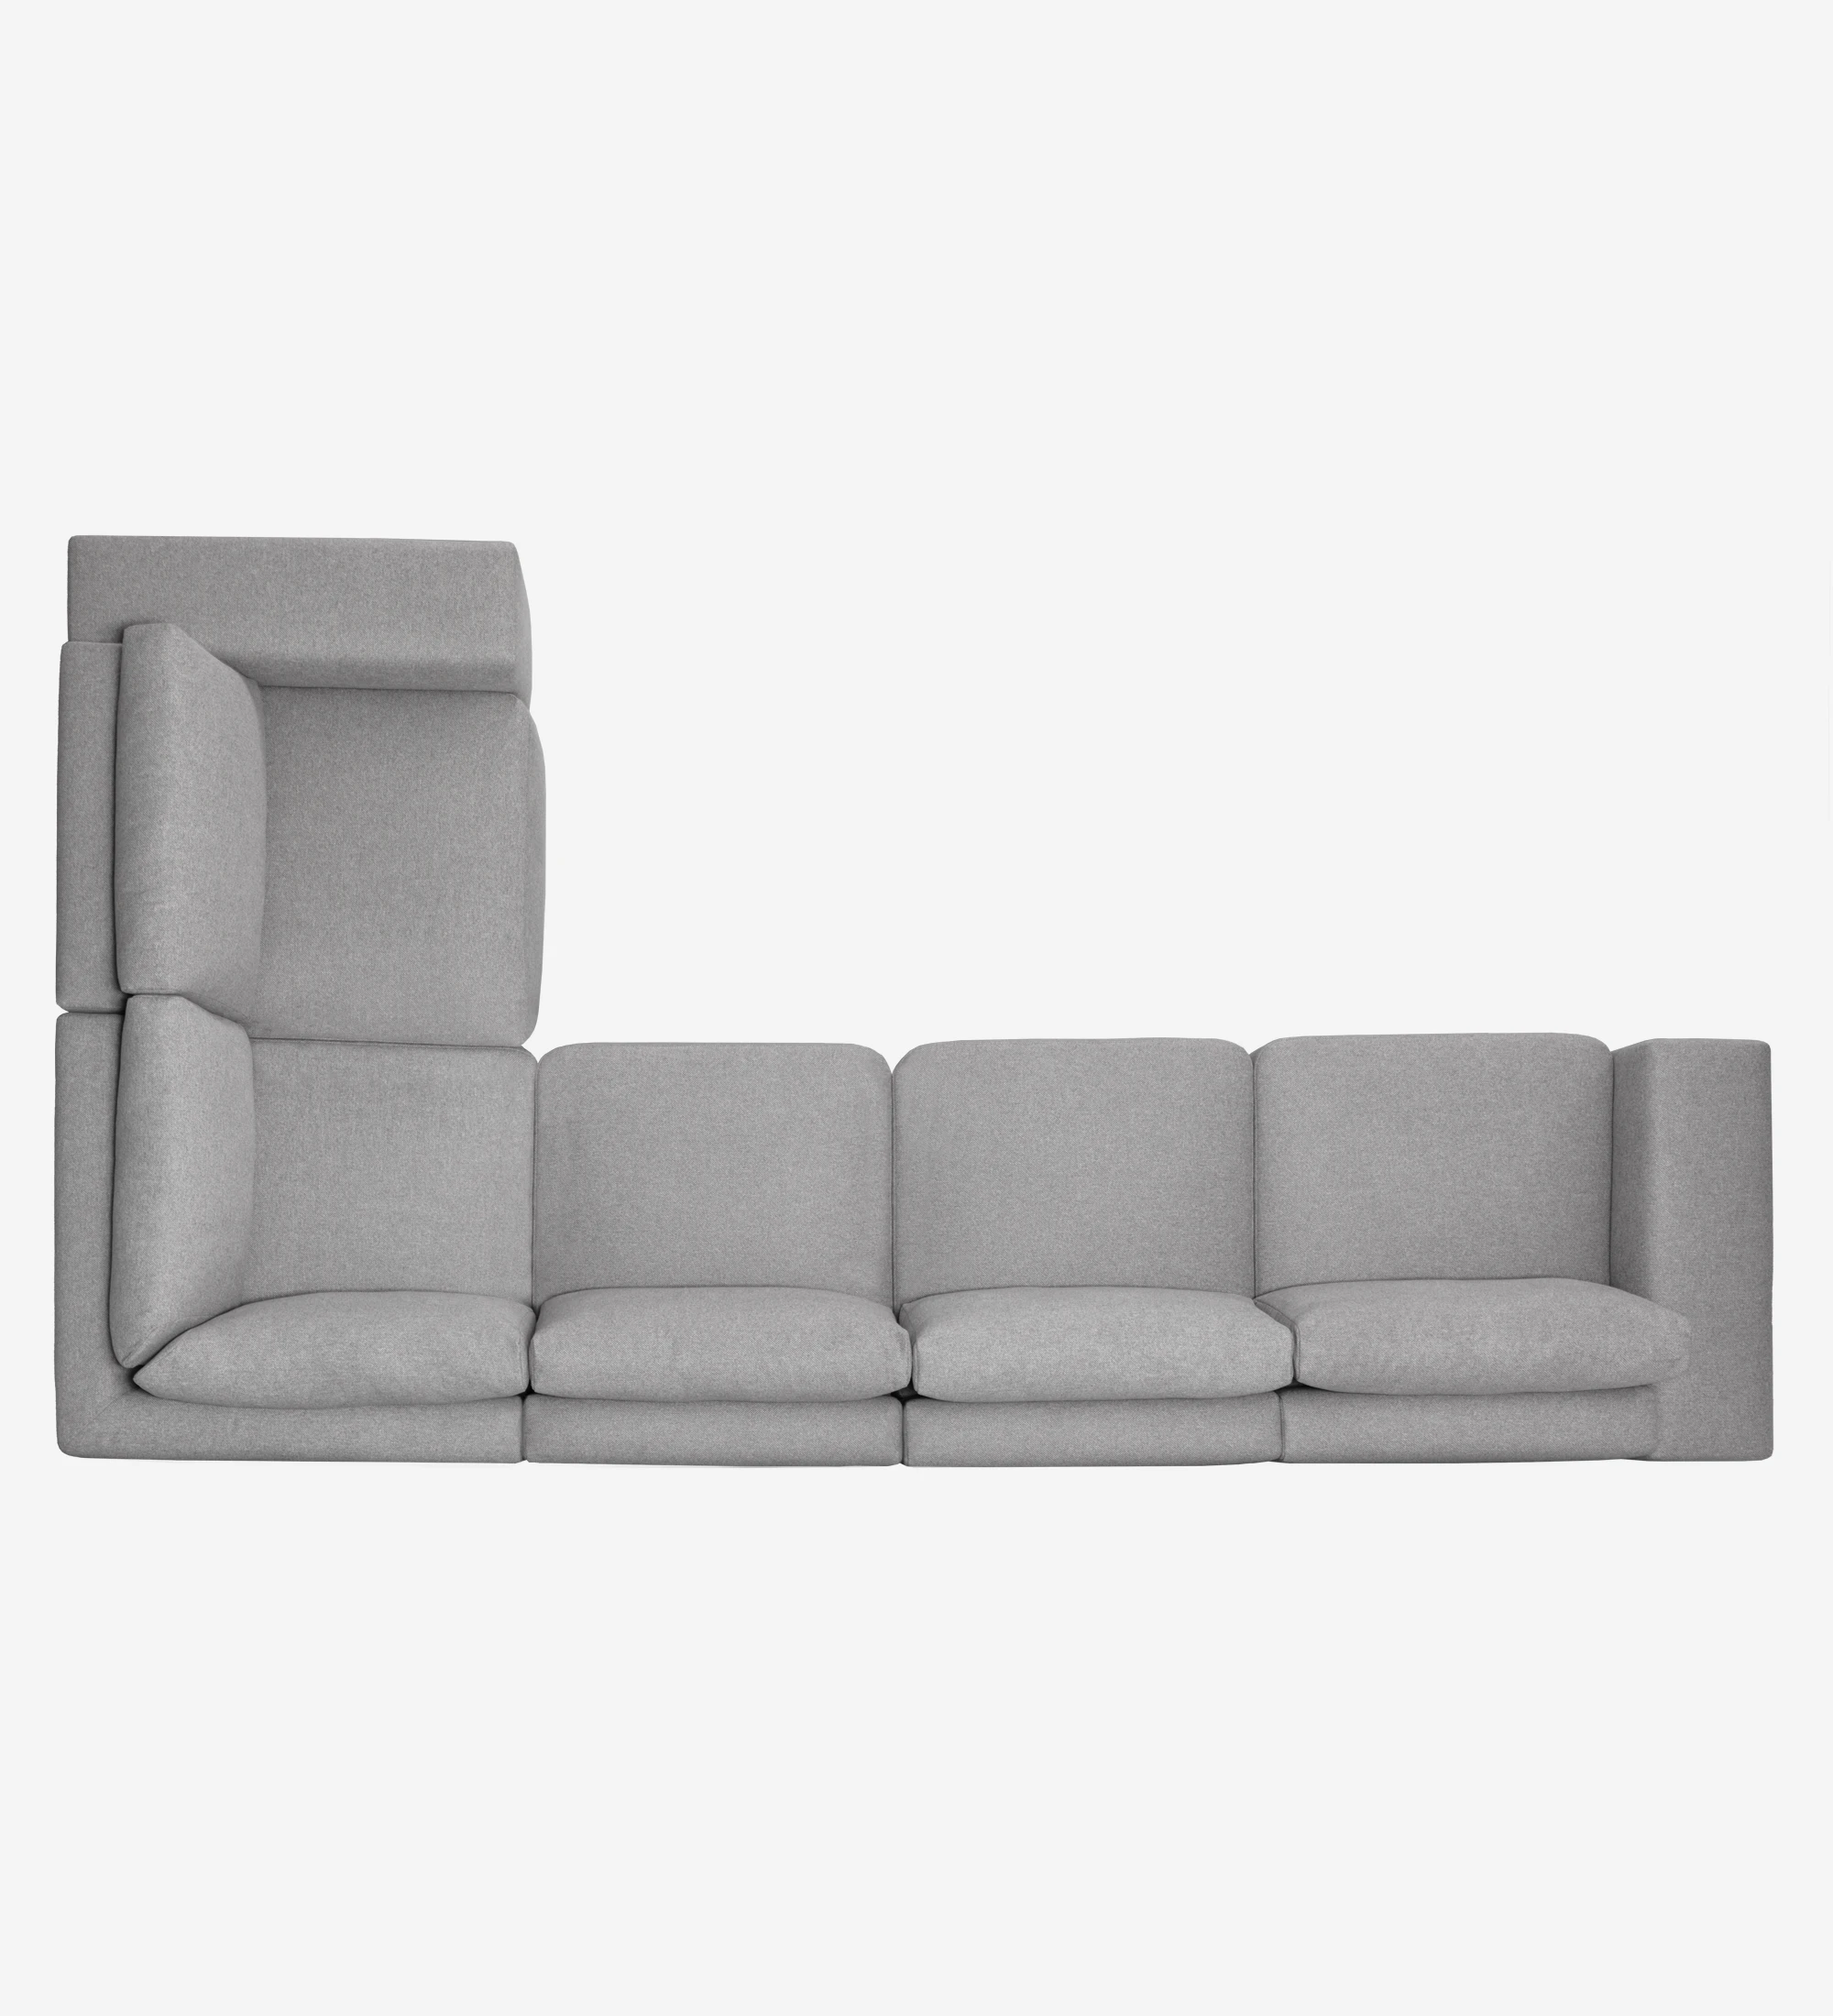 Paris corner sofa 3+1 seats, upholstered in gray fabric, 374 x 214 cm.